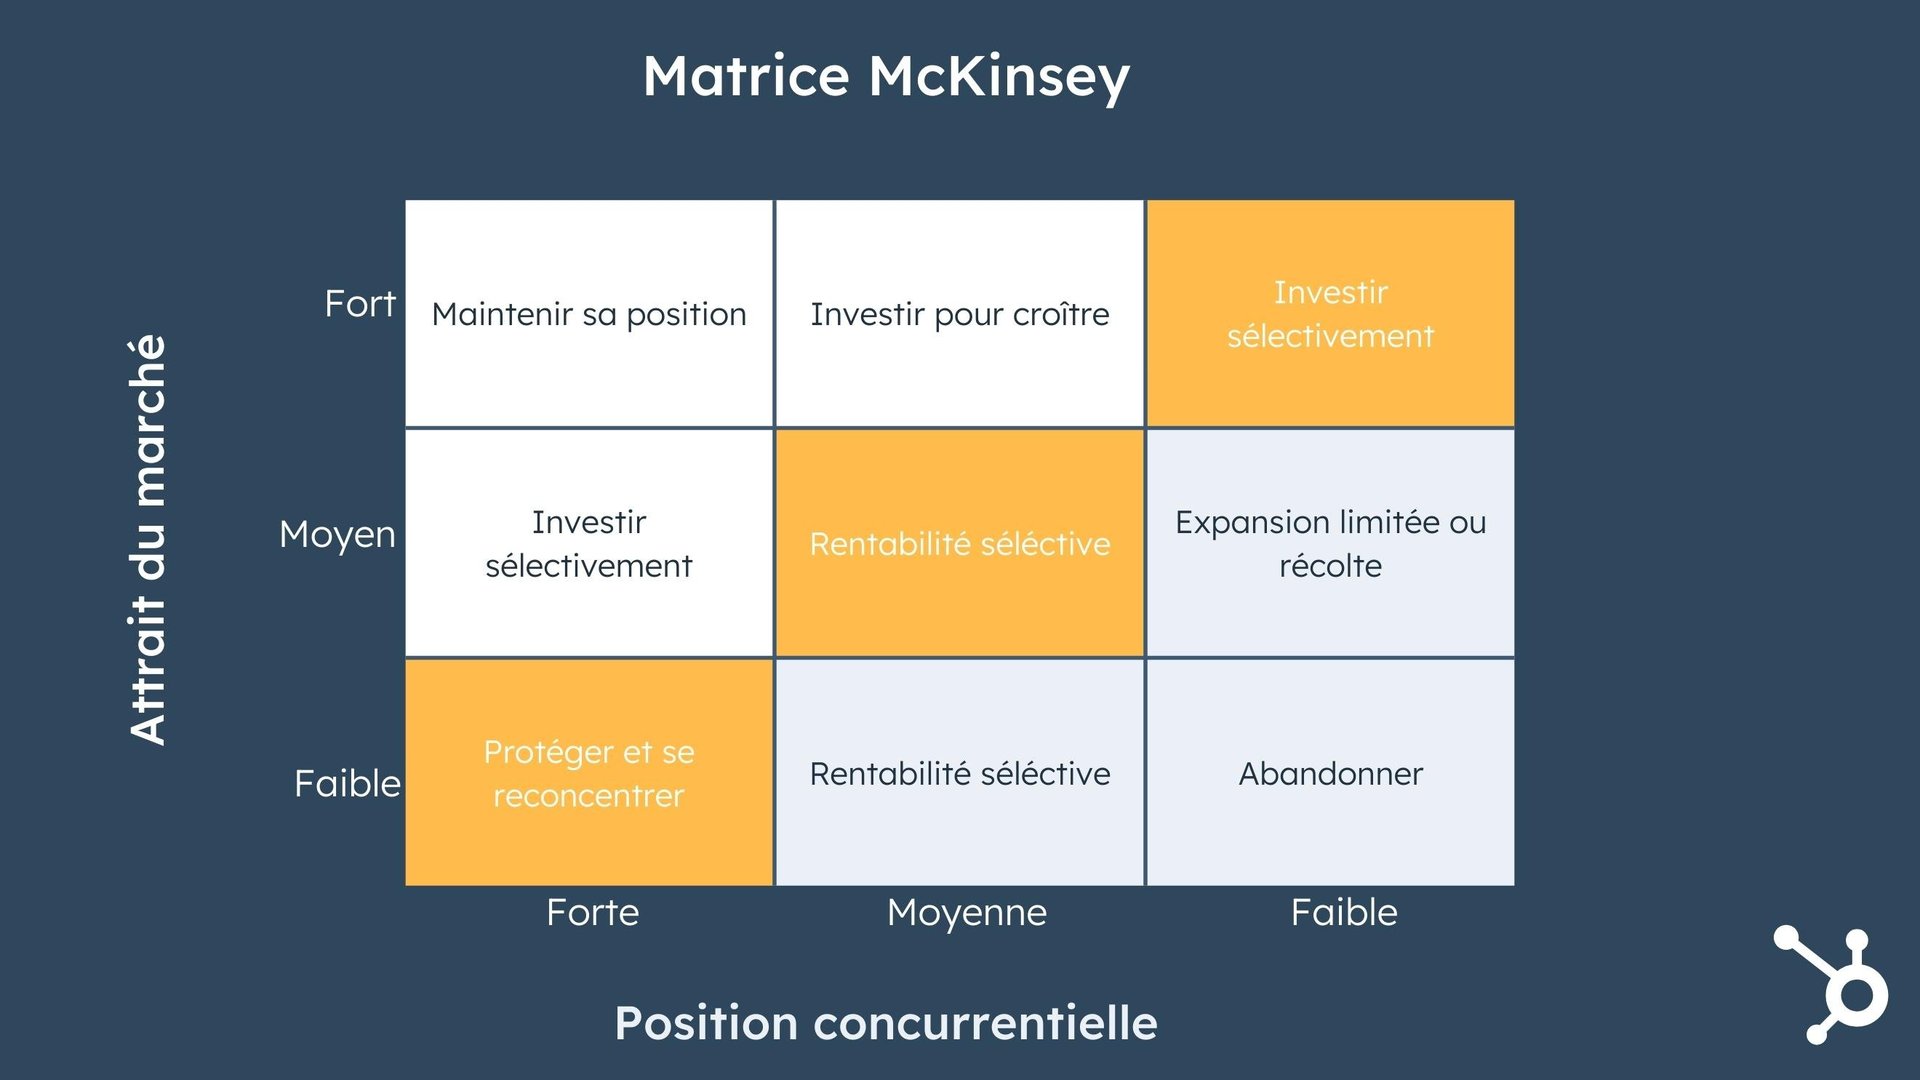 Matrice McKinsey